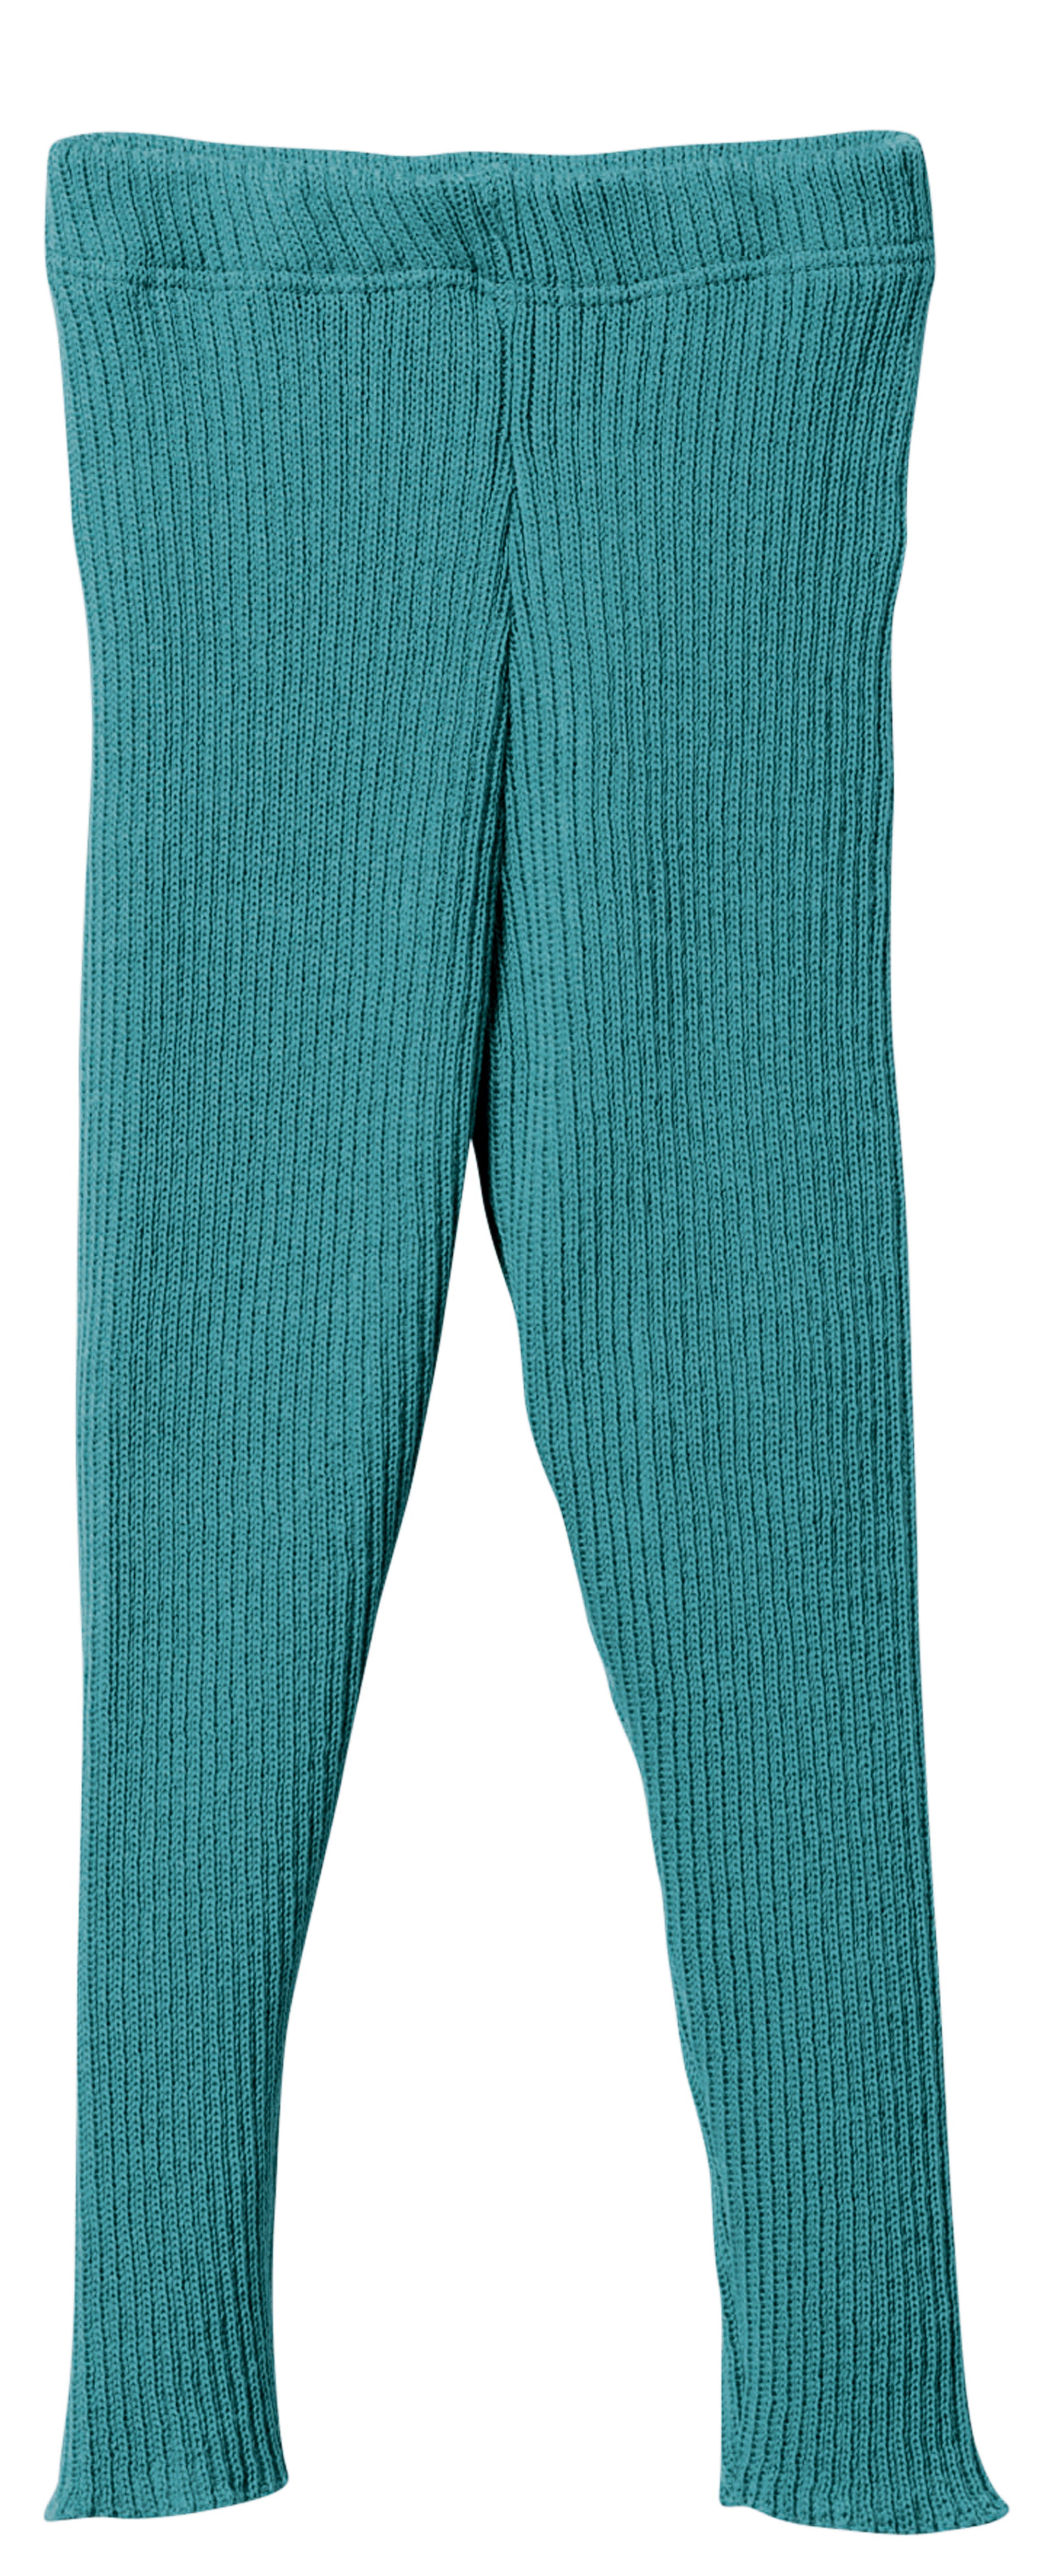 Disana Knitted Wool Leggings Lagoon Blue - Leggings Gebreide Wol Turquoise Blauw